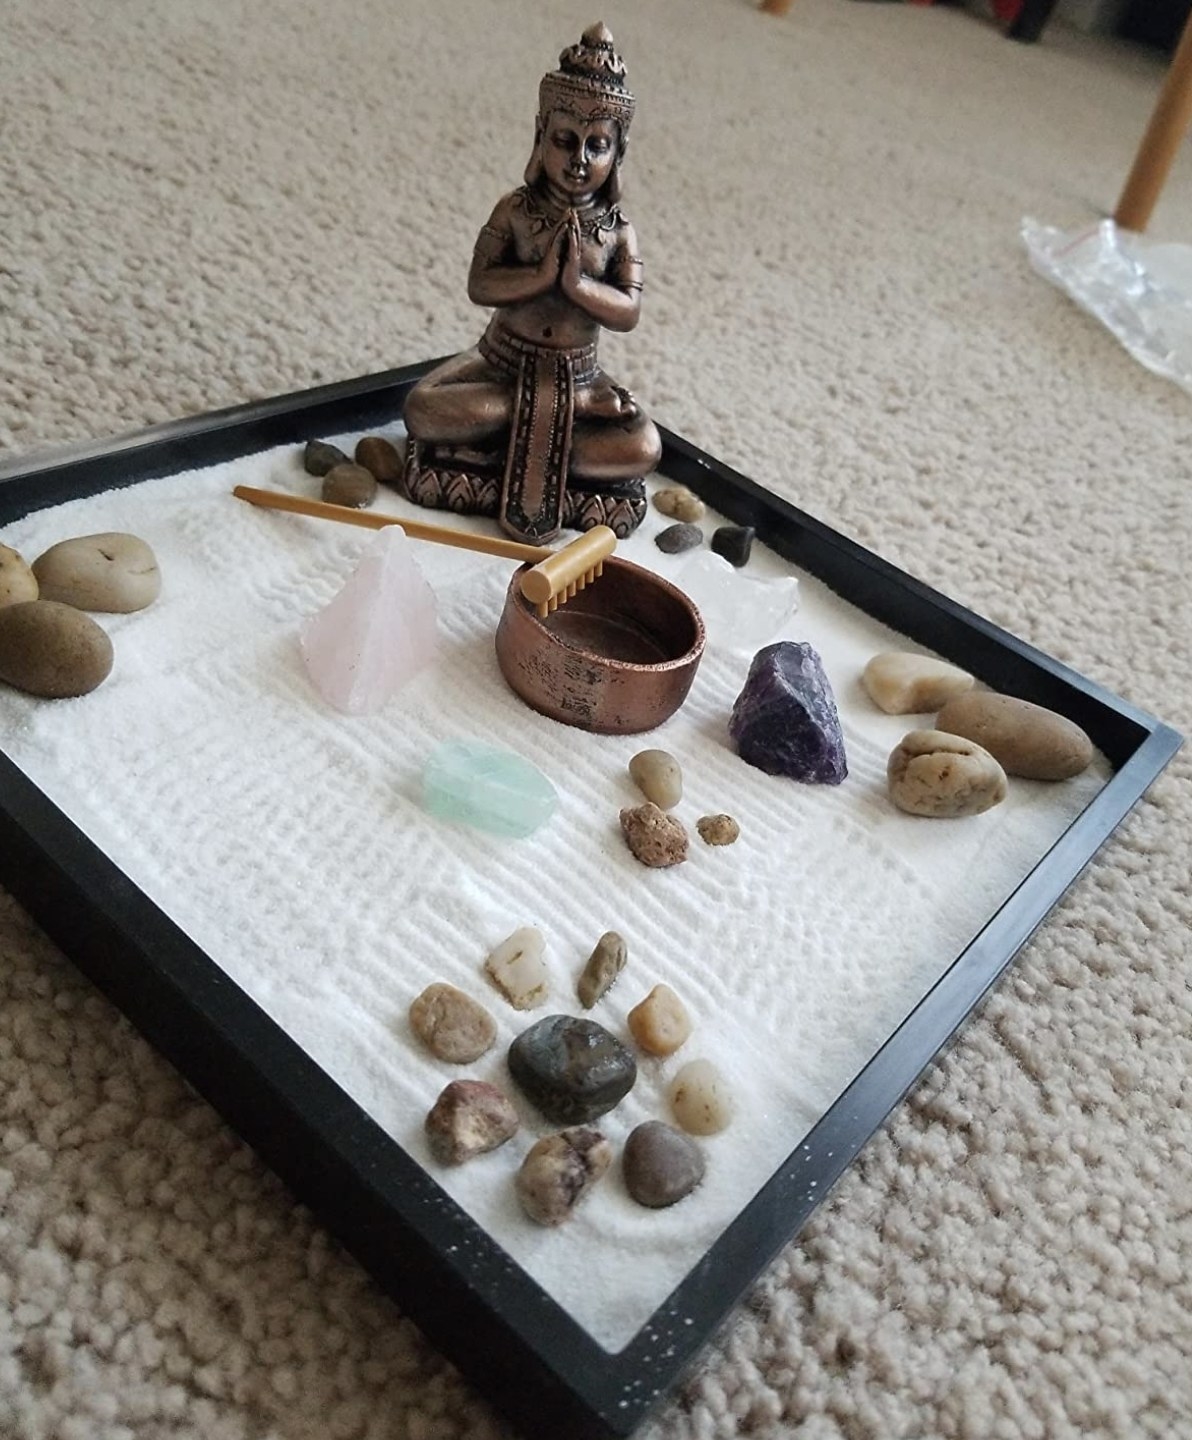 a zen garden with stones, a rake, sand, and a Buddha statue